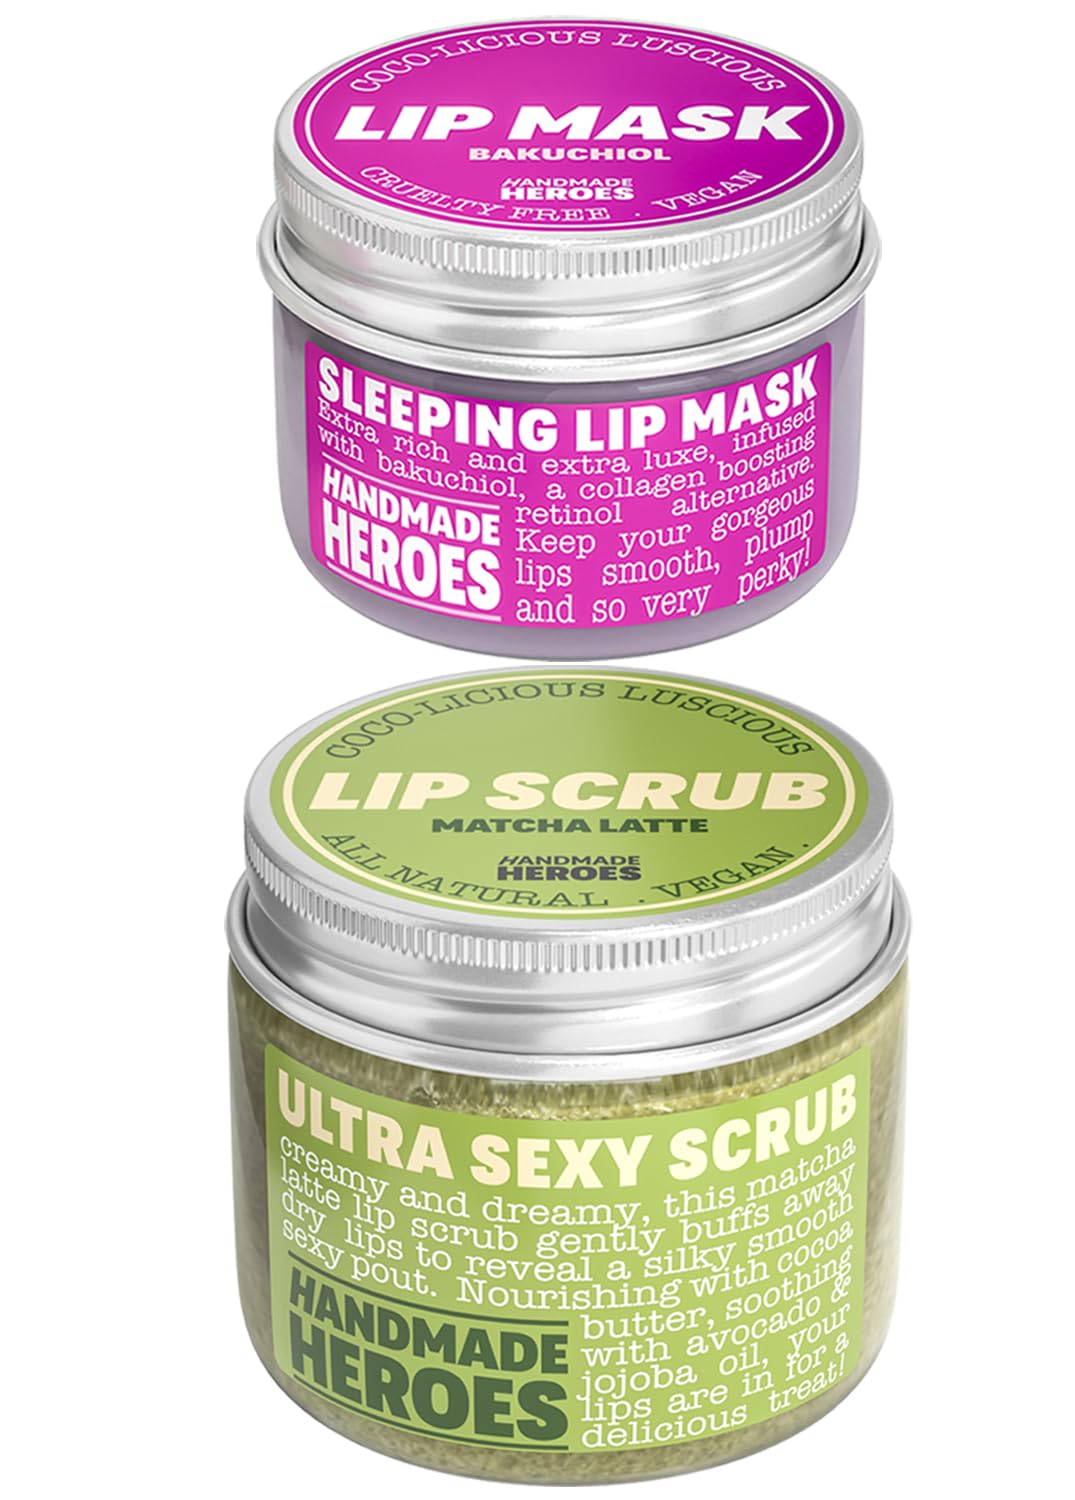 Save 15% - Handmade Heroes Plumping Bakuchiol Lip Mask and Green Tea Lip Scrub Bundle - Clean Sustainable Skincare Lip Exfoliator and Lip Treatment - Matcha Latte & Bakuchiol